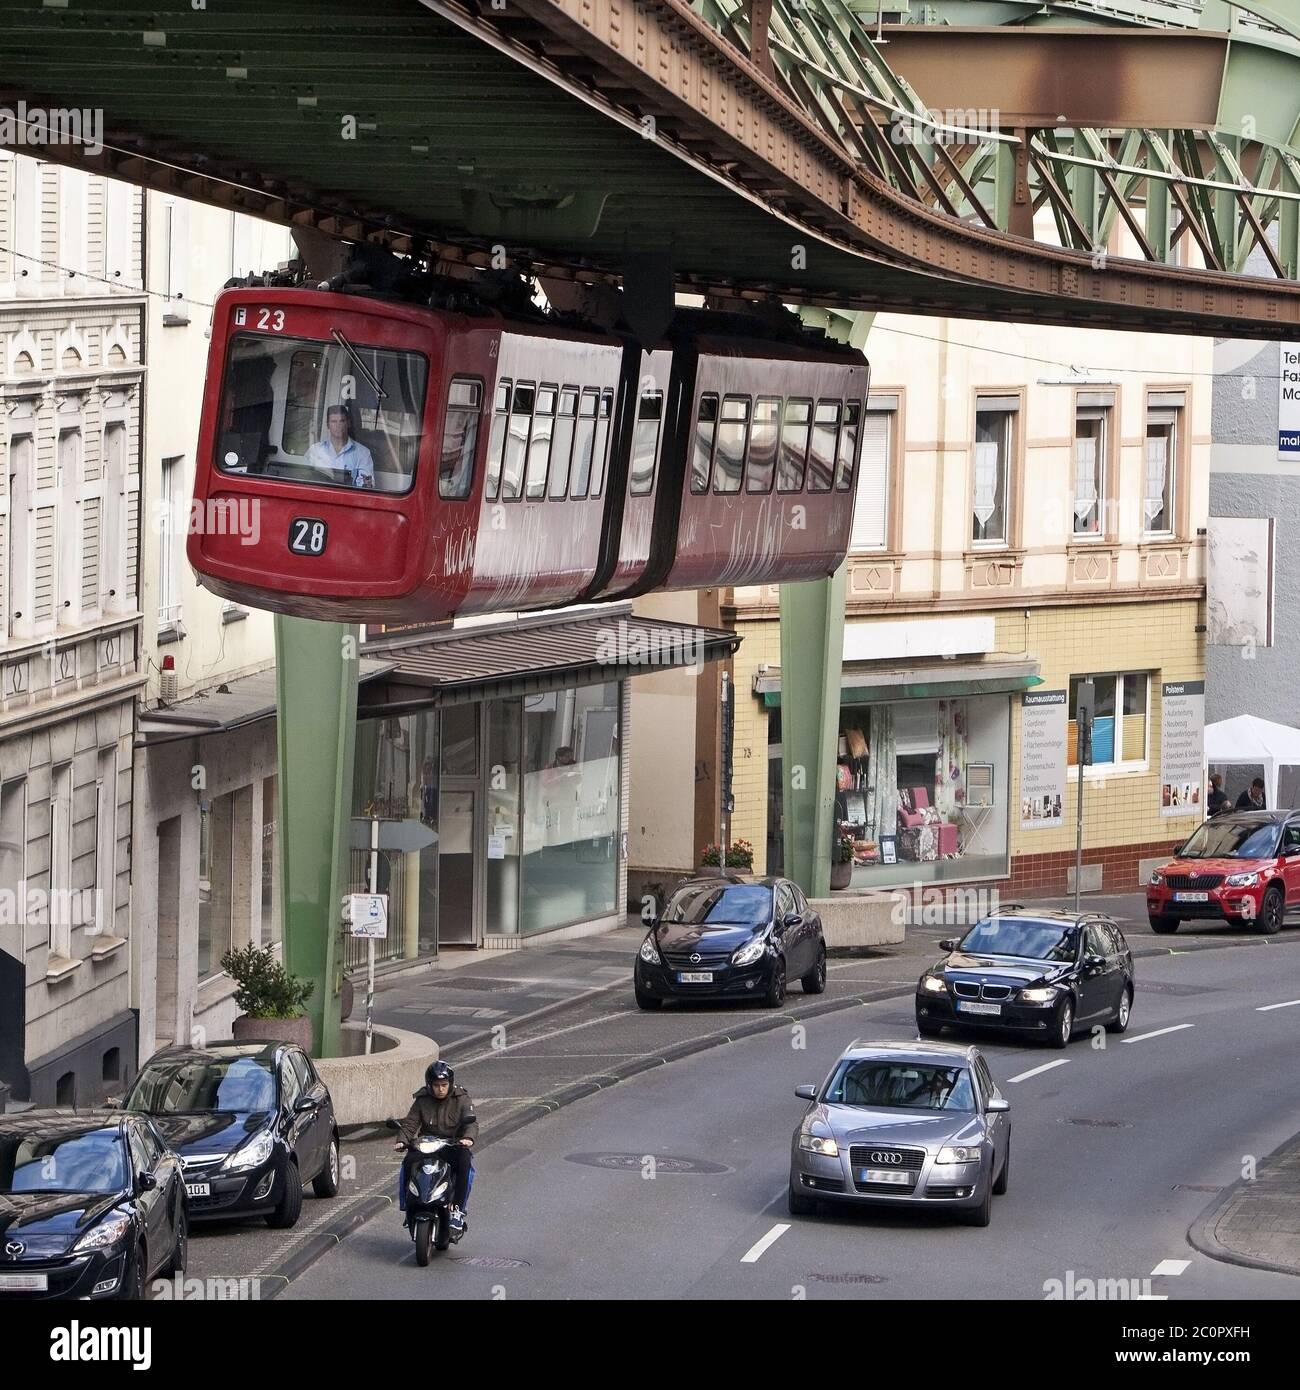 Schwebebahn, suspended monorail, Wuppertal Stock Photo